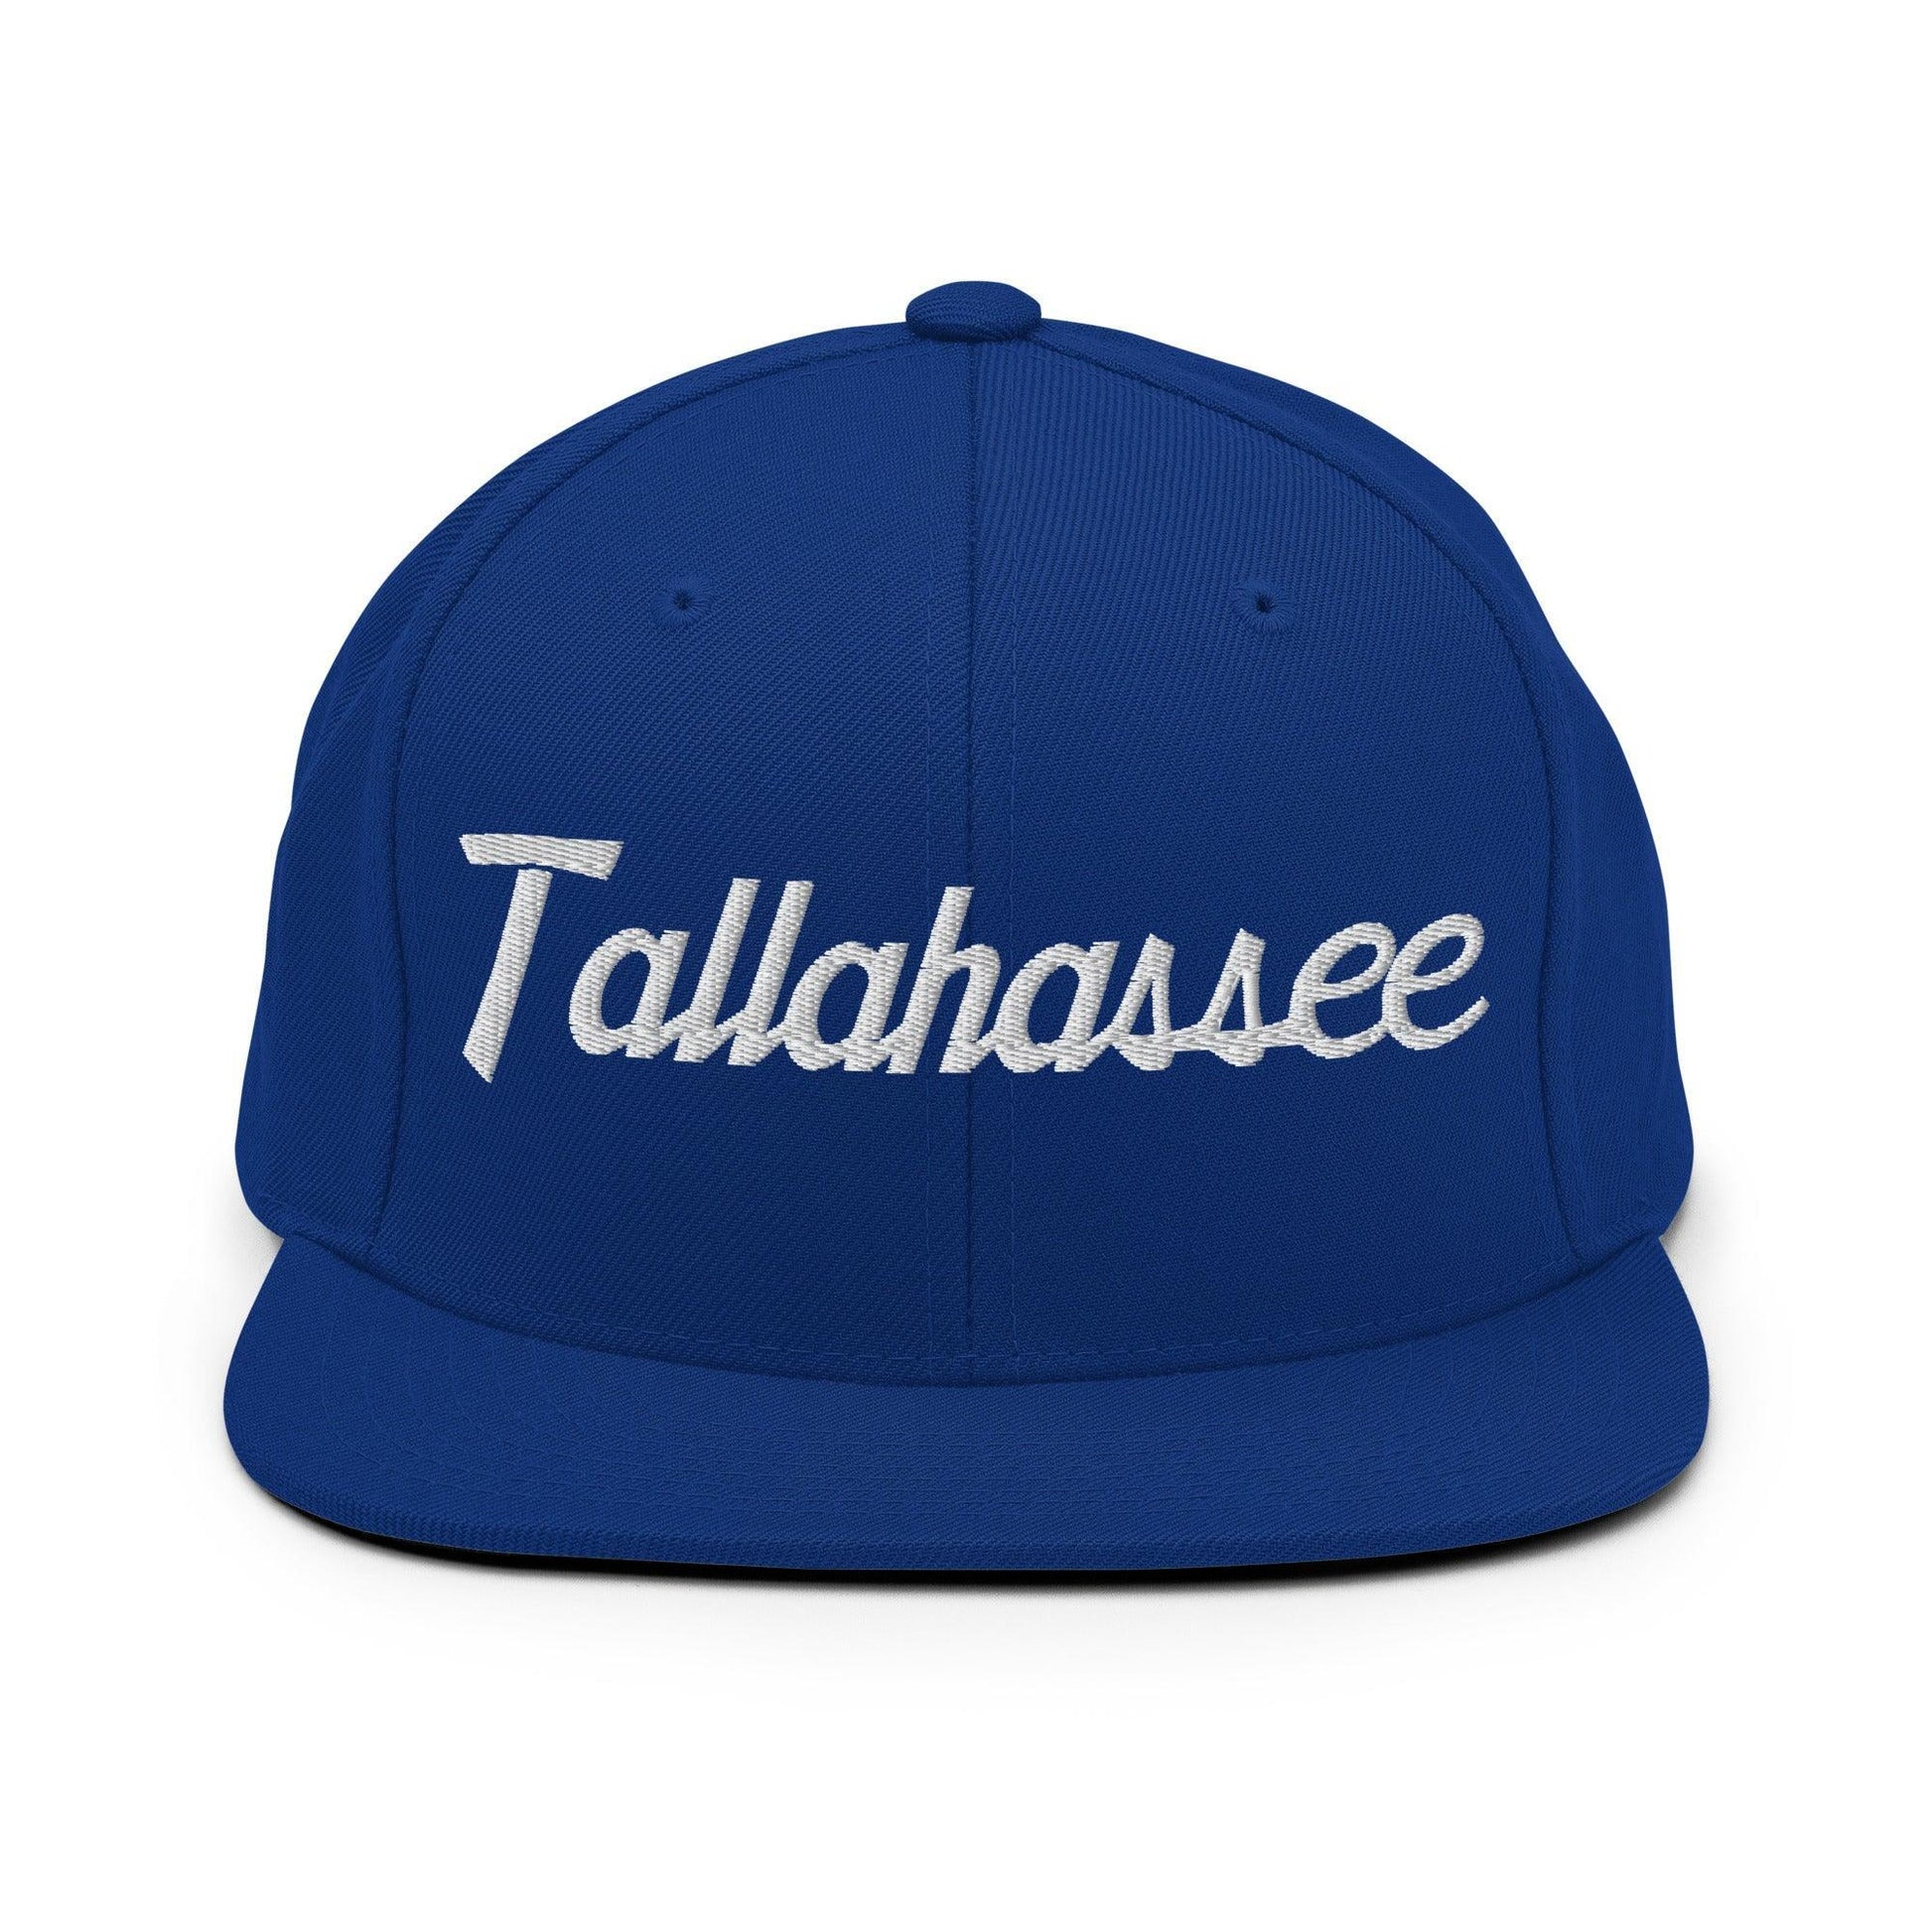 Tallahassee Script Snapback Hat Royal Blue